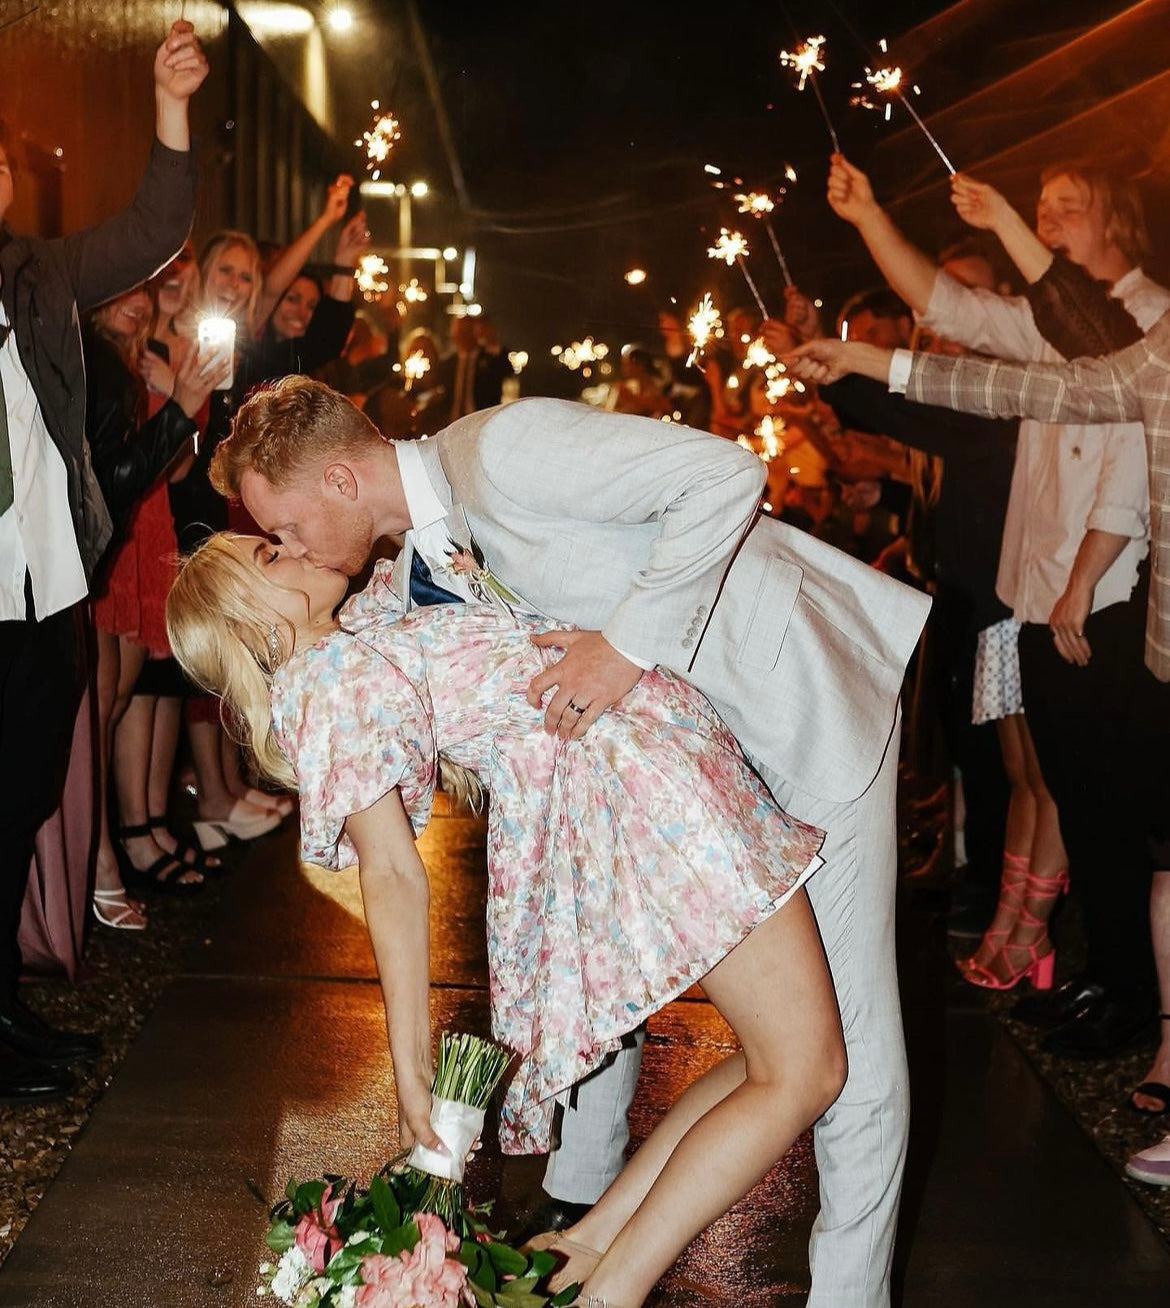 Sparkler Magic: Capturing Wedding Photos With Sparklers-Part One